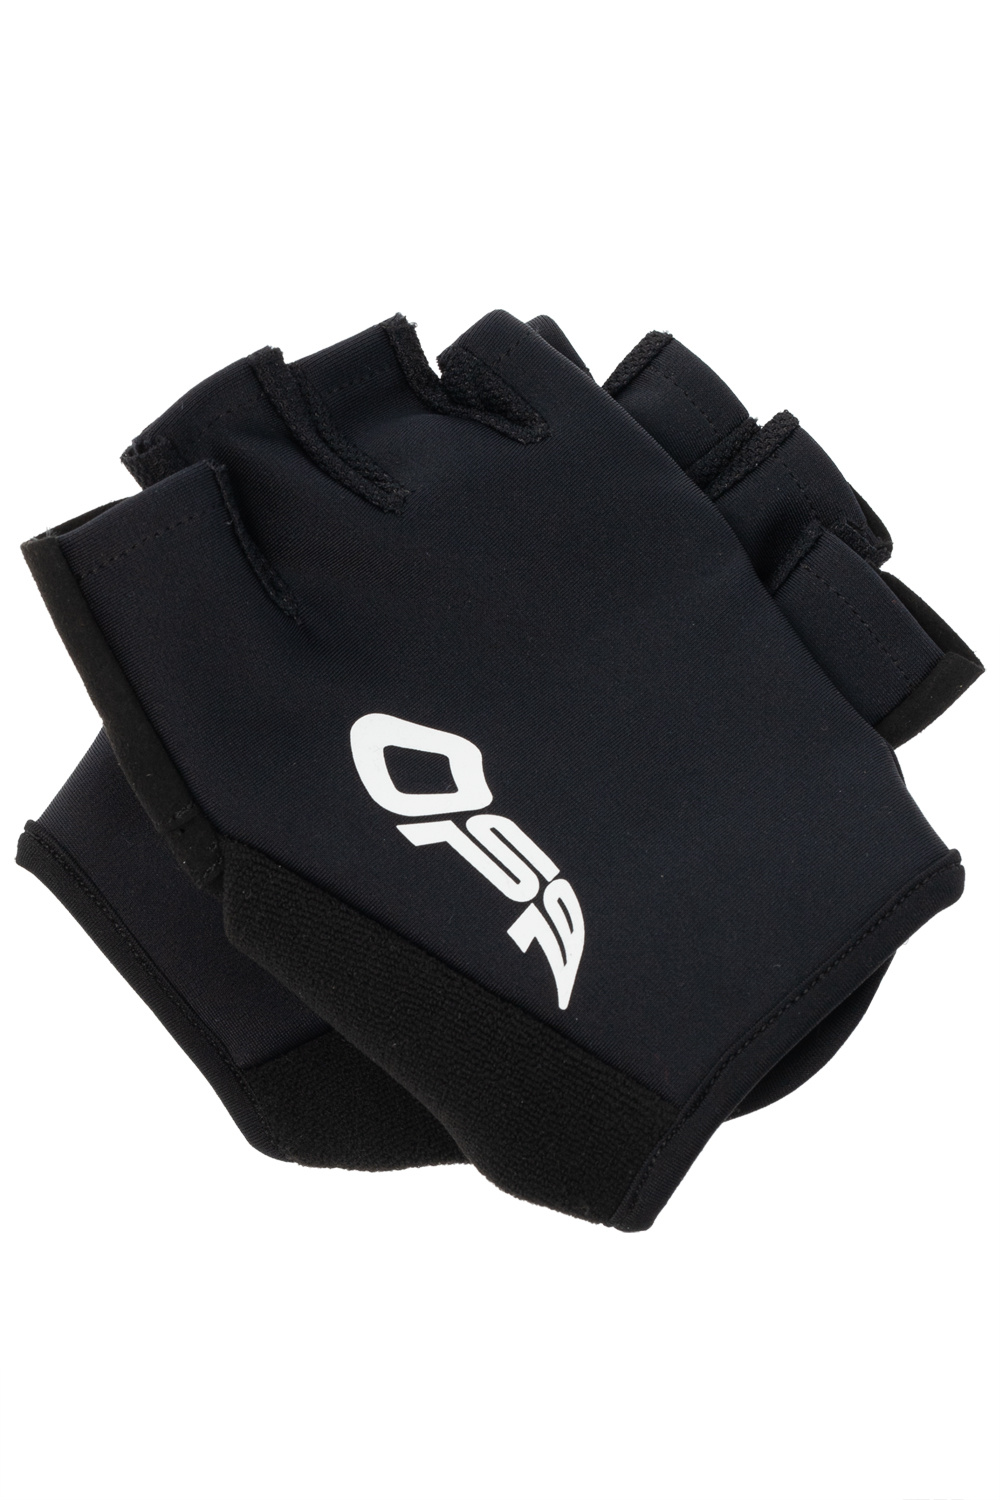 Off-White Sports gloves